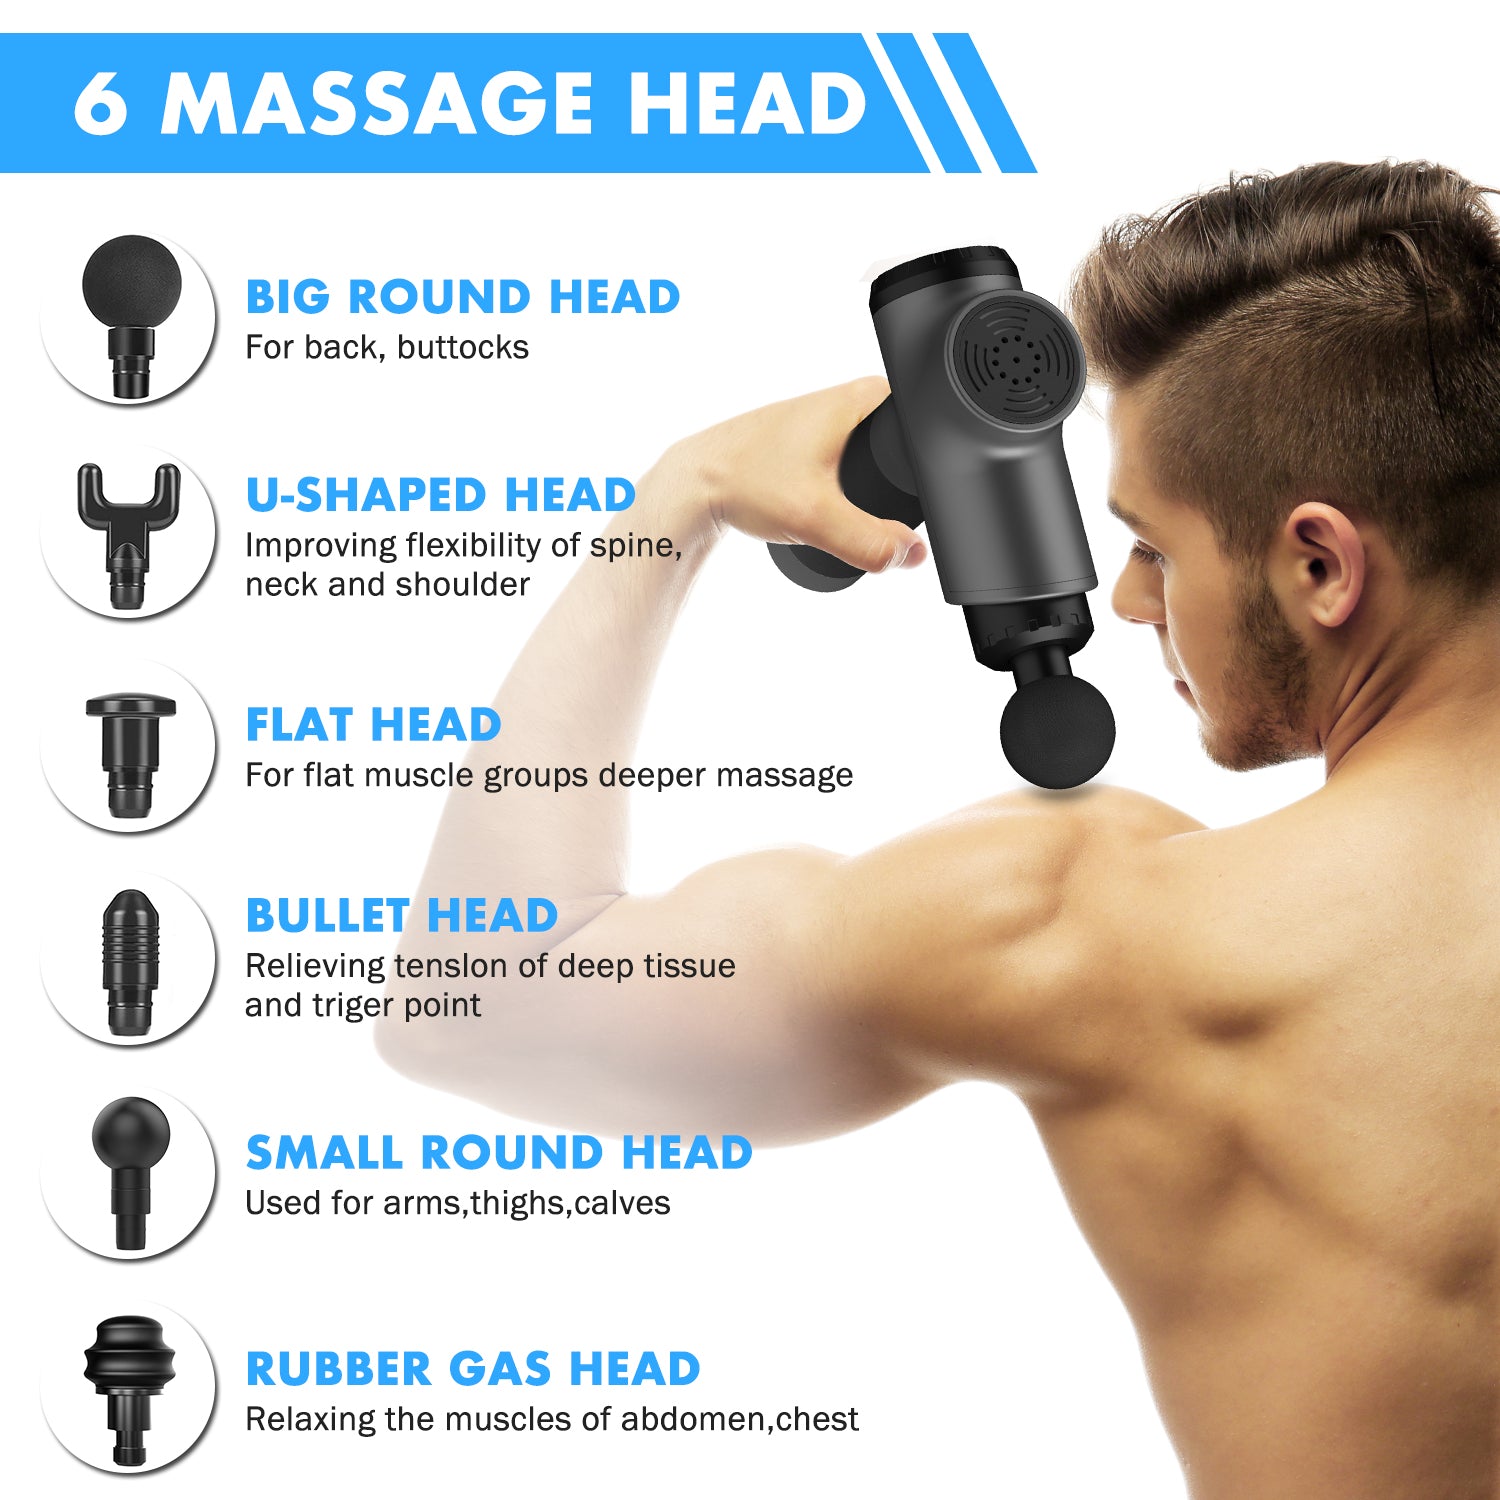 details of 6 massage heads